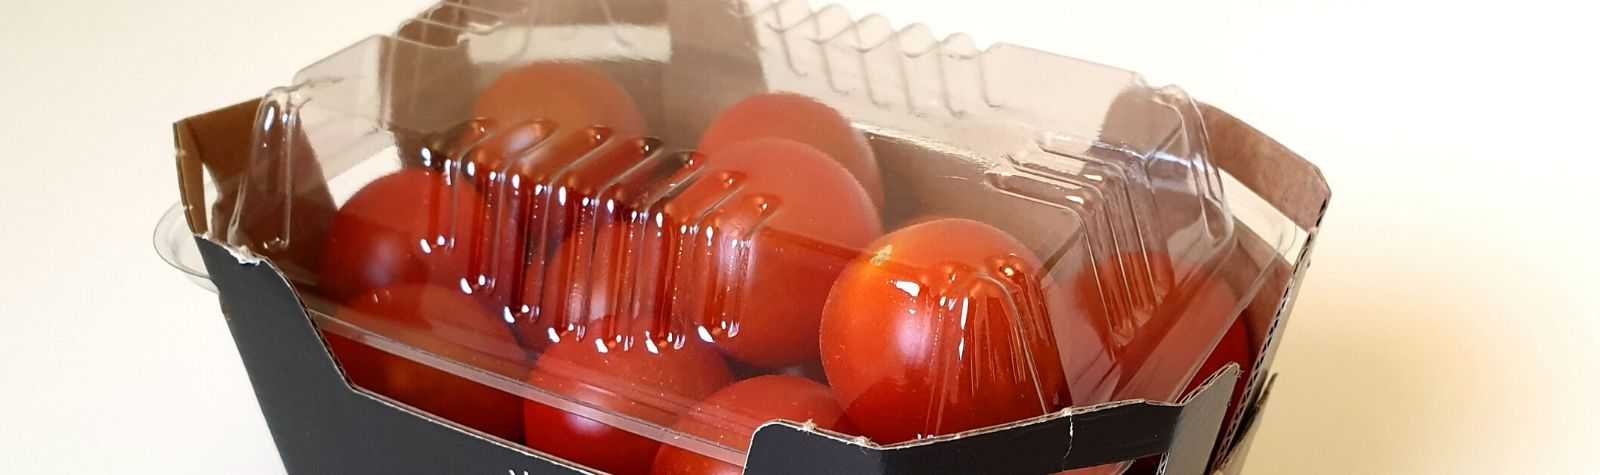 Looije presenta a ‘Minerva’, su nueva marca de tomate cherry